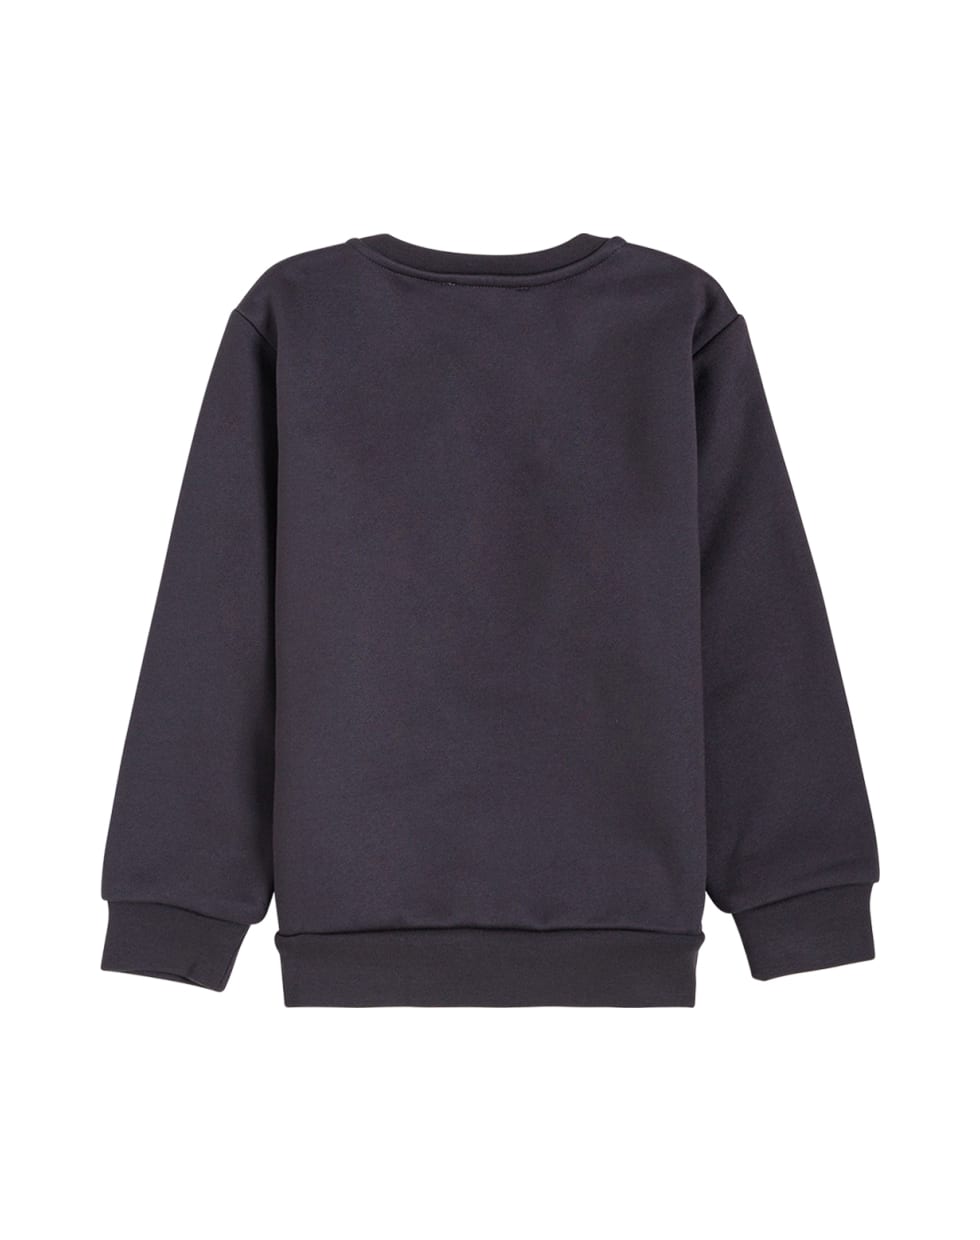 Emporio Armani Black Modal Blend Sweatshirt With Logo - Black